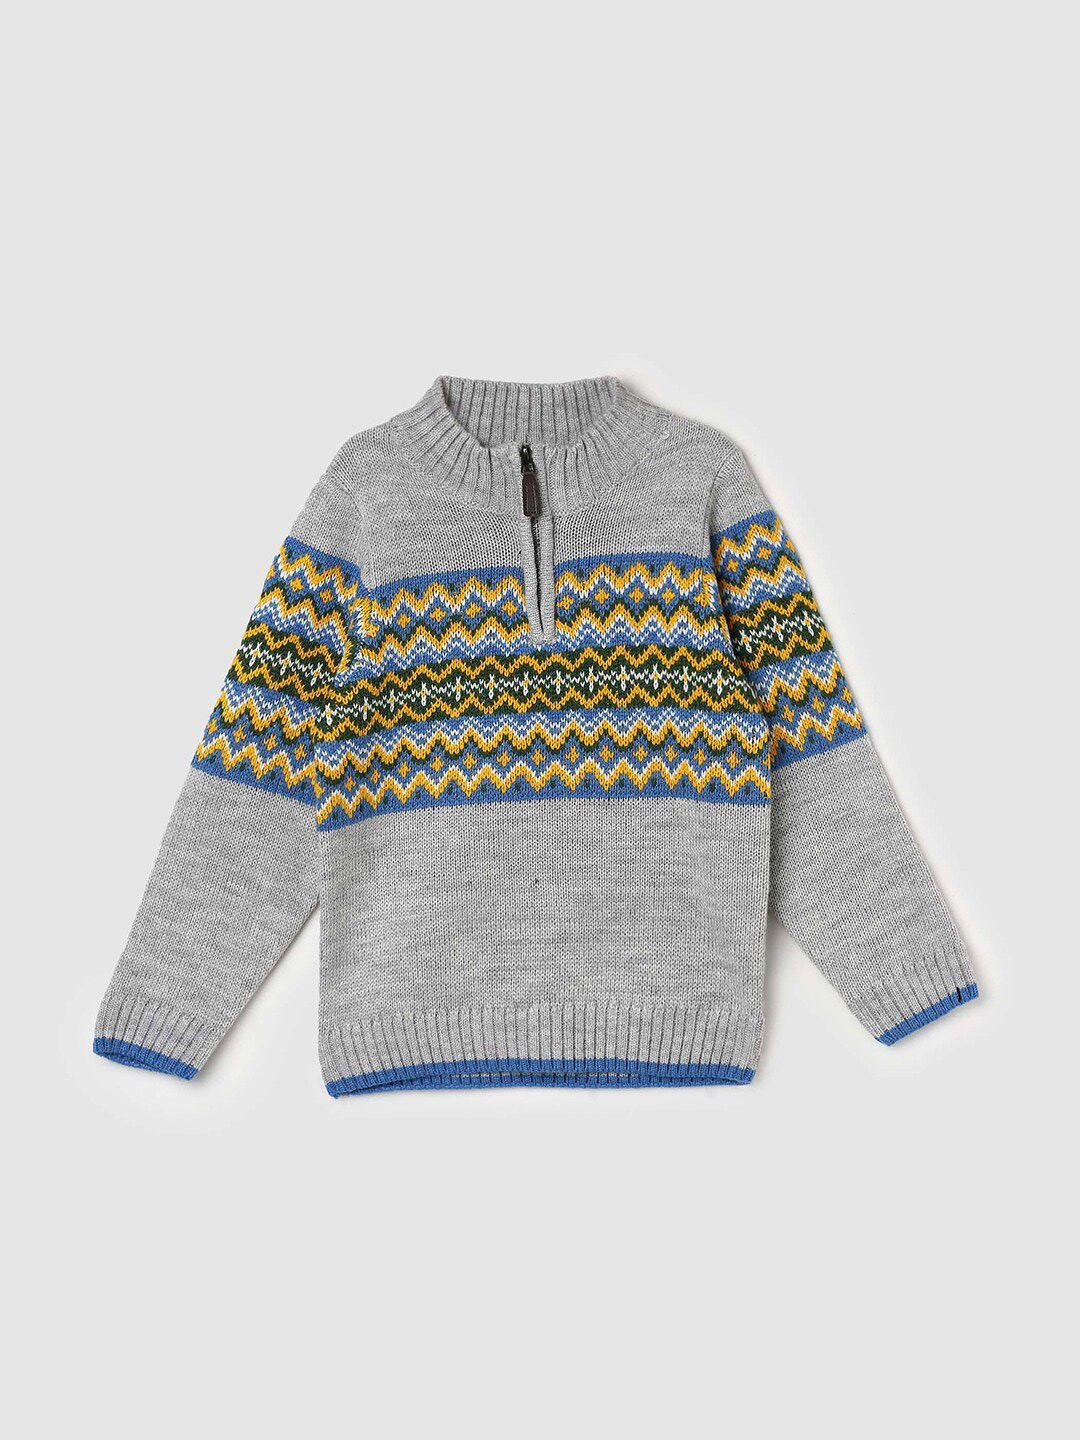 max boys mock collar self design acrylic wool pullover sweater